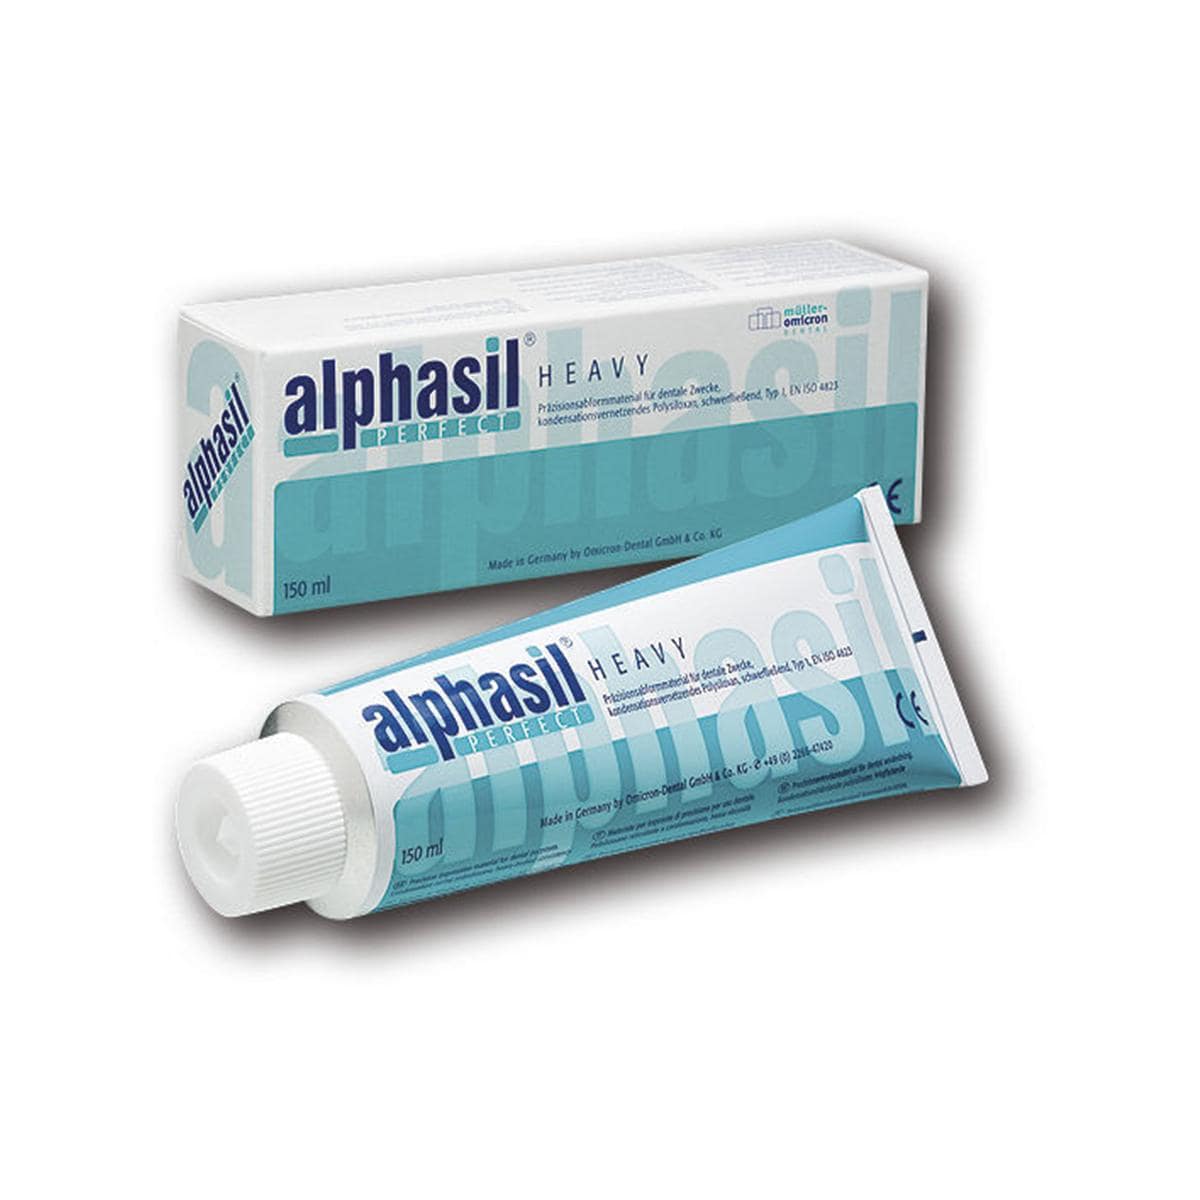 alphasil® PERFECT HEAVY - Tube 150 ml